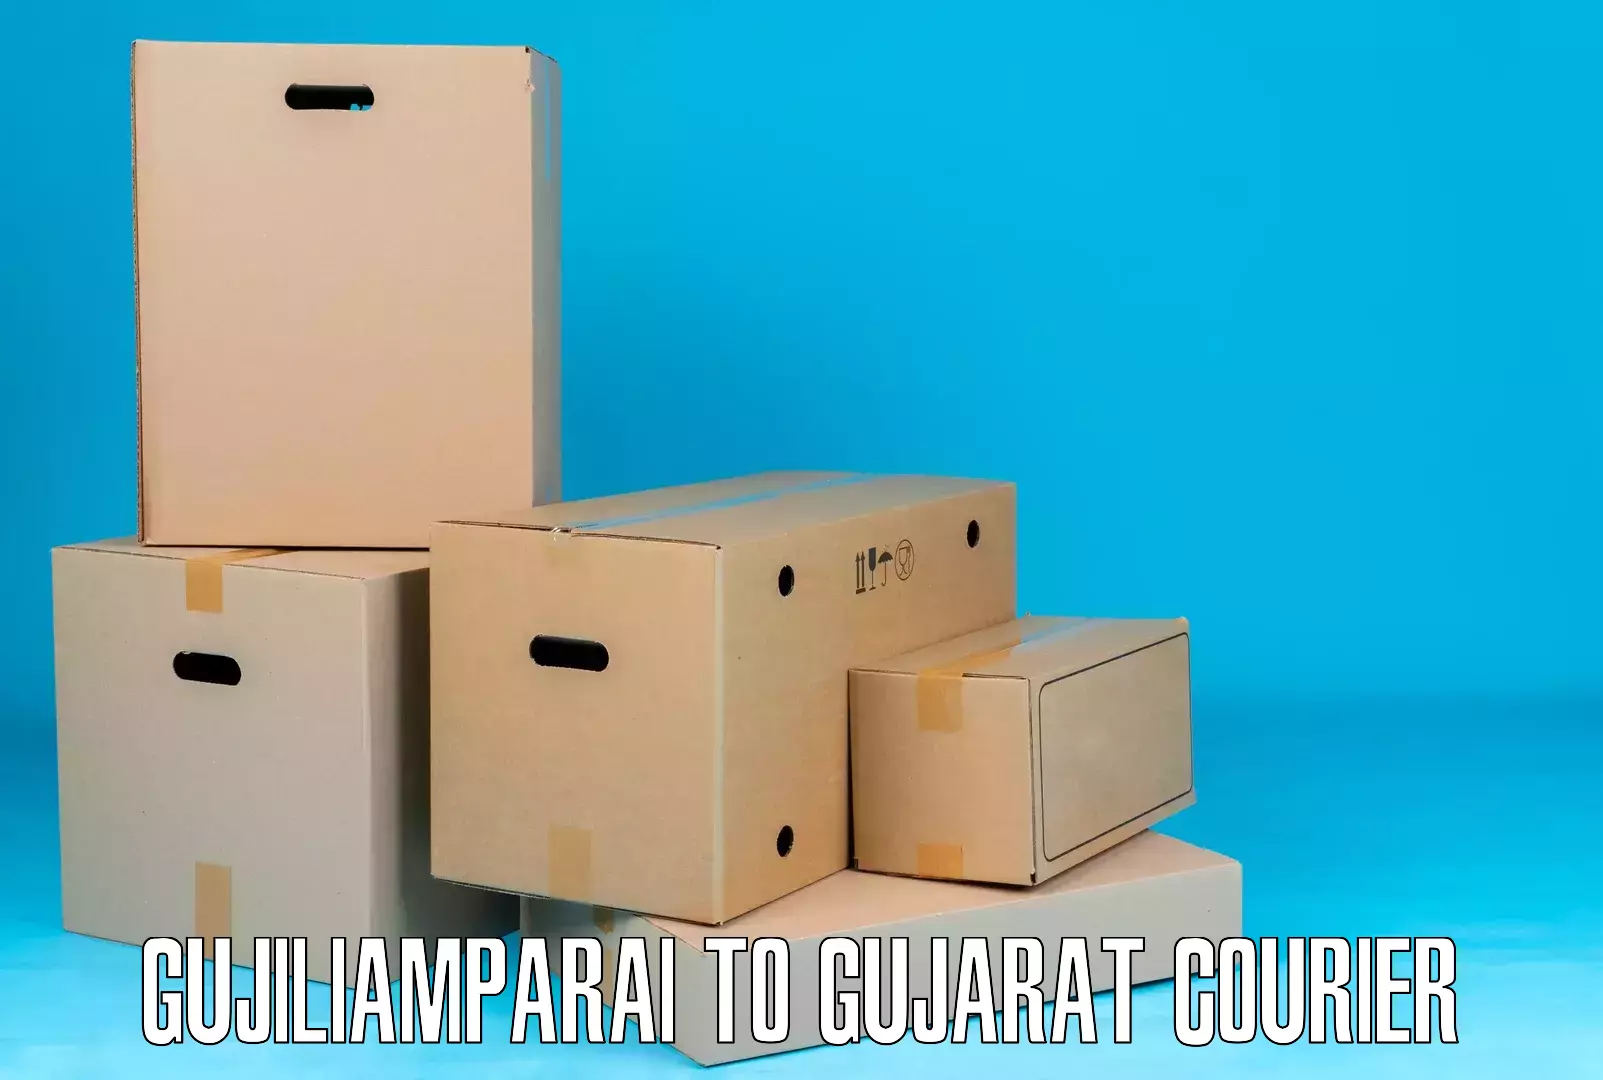 Quality courier partnerships in Gujiliamparai to Gujarat